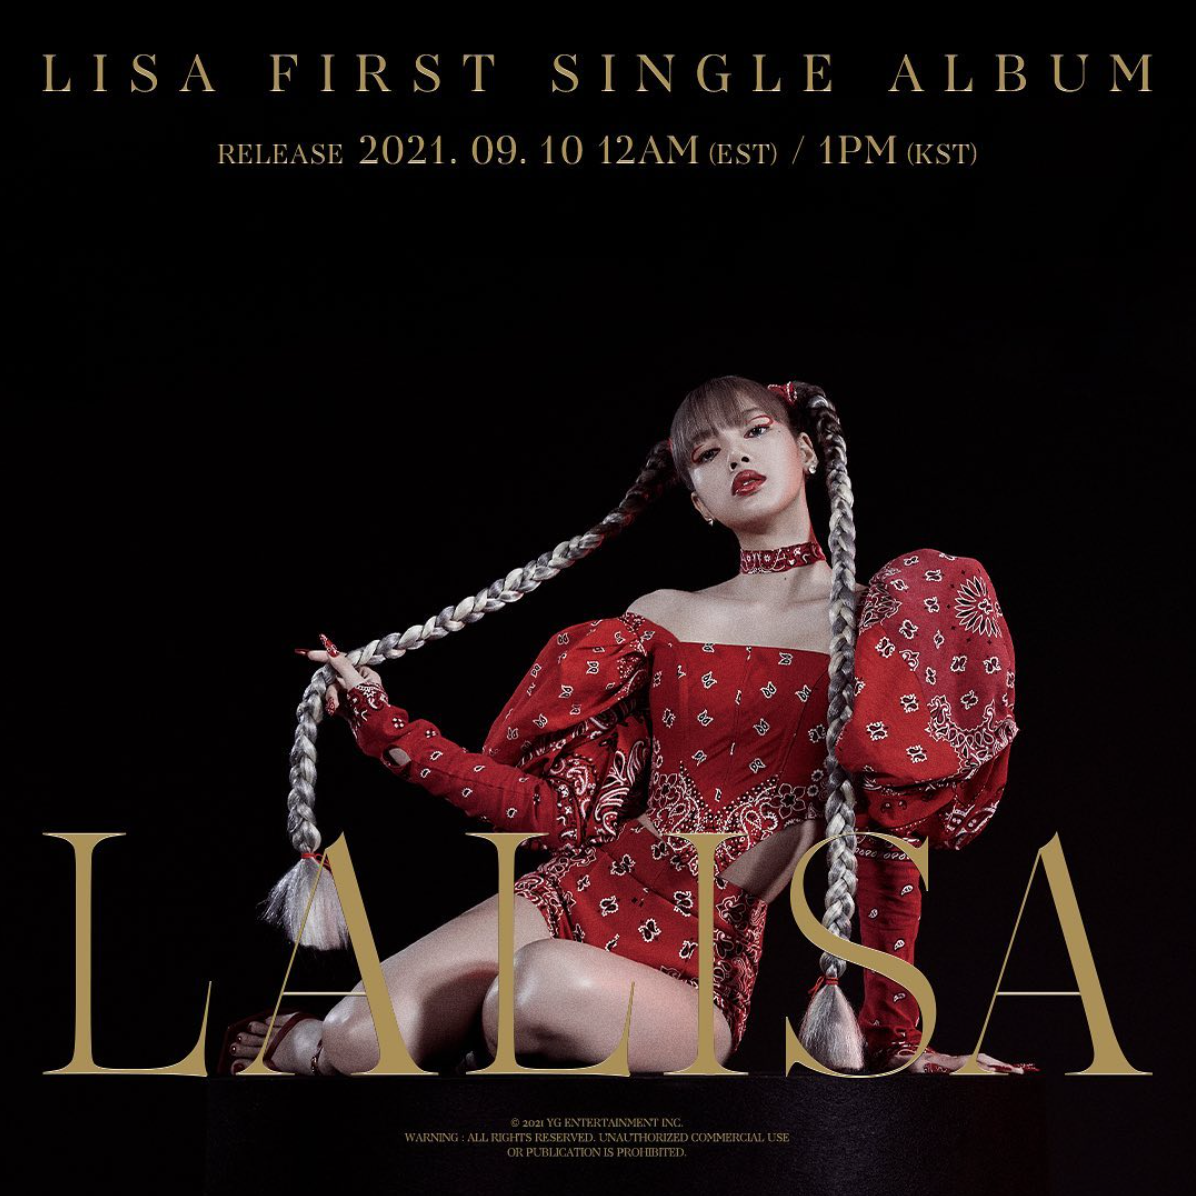 Lisa BLACKPINK estrena 'LALISA'